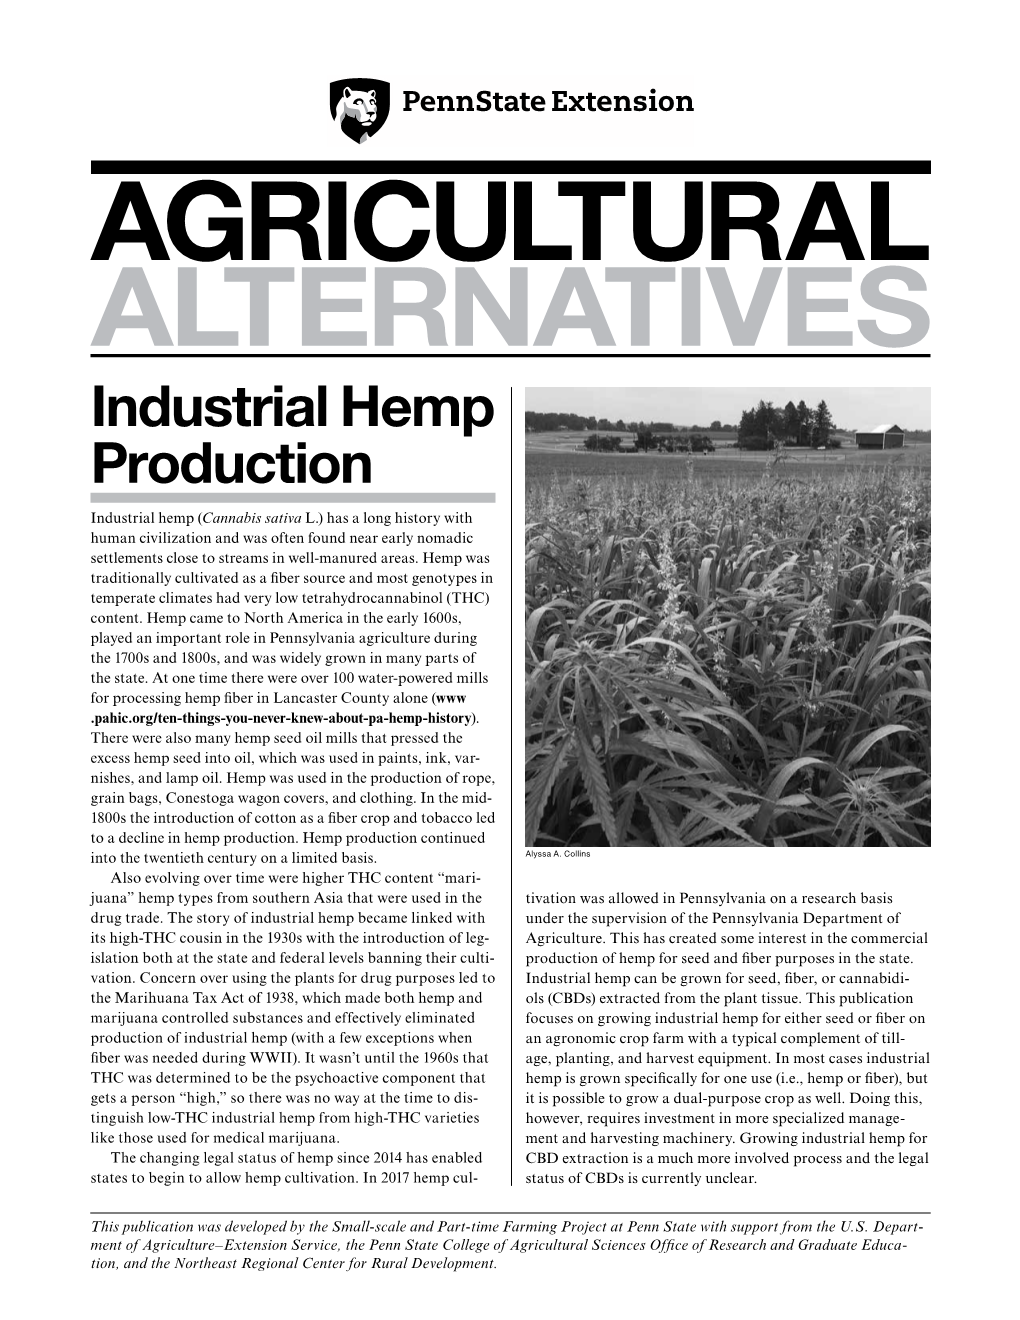 AGRICULTURAL ALTERNATIVES Industrial Hemp Production